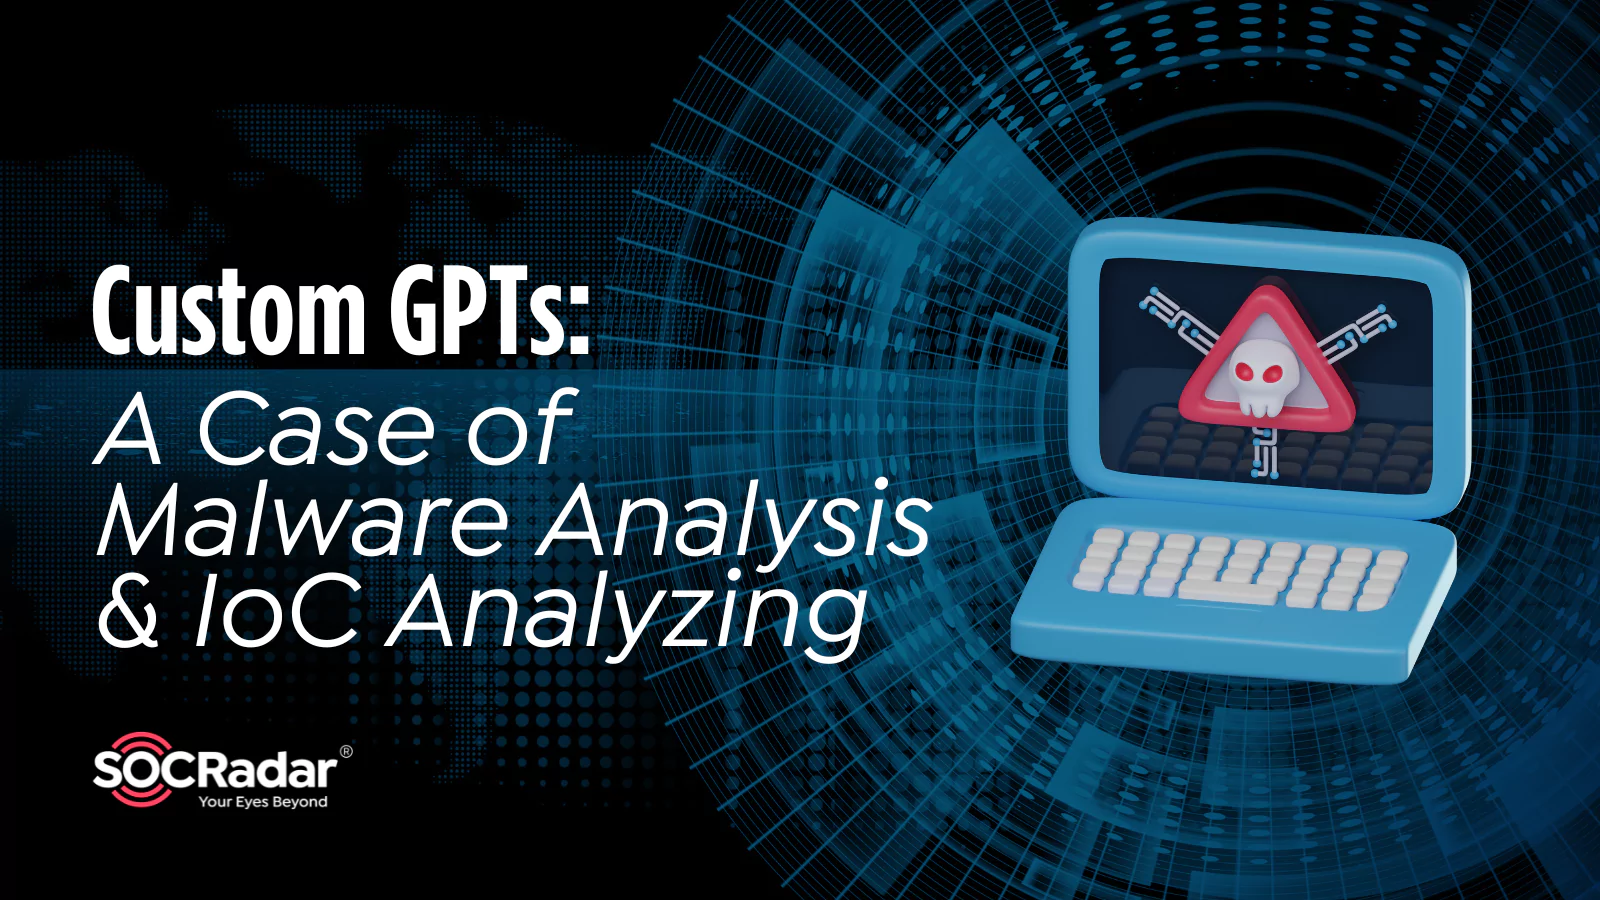 SOCRadar® Cyber Intelligence Inc. | Custom GPTs: A Case of Malware Analysis and IoC Analyzing